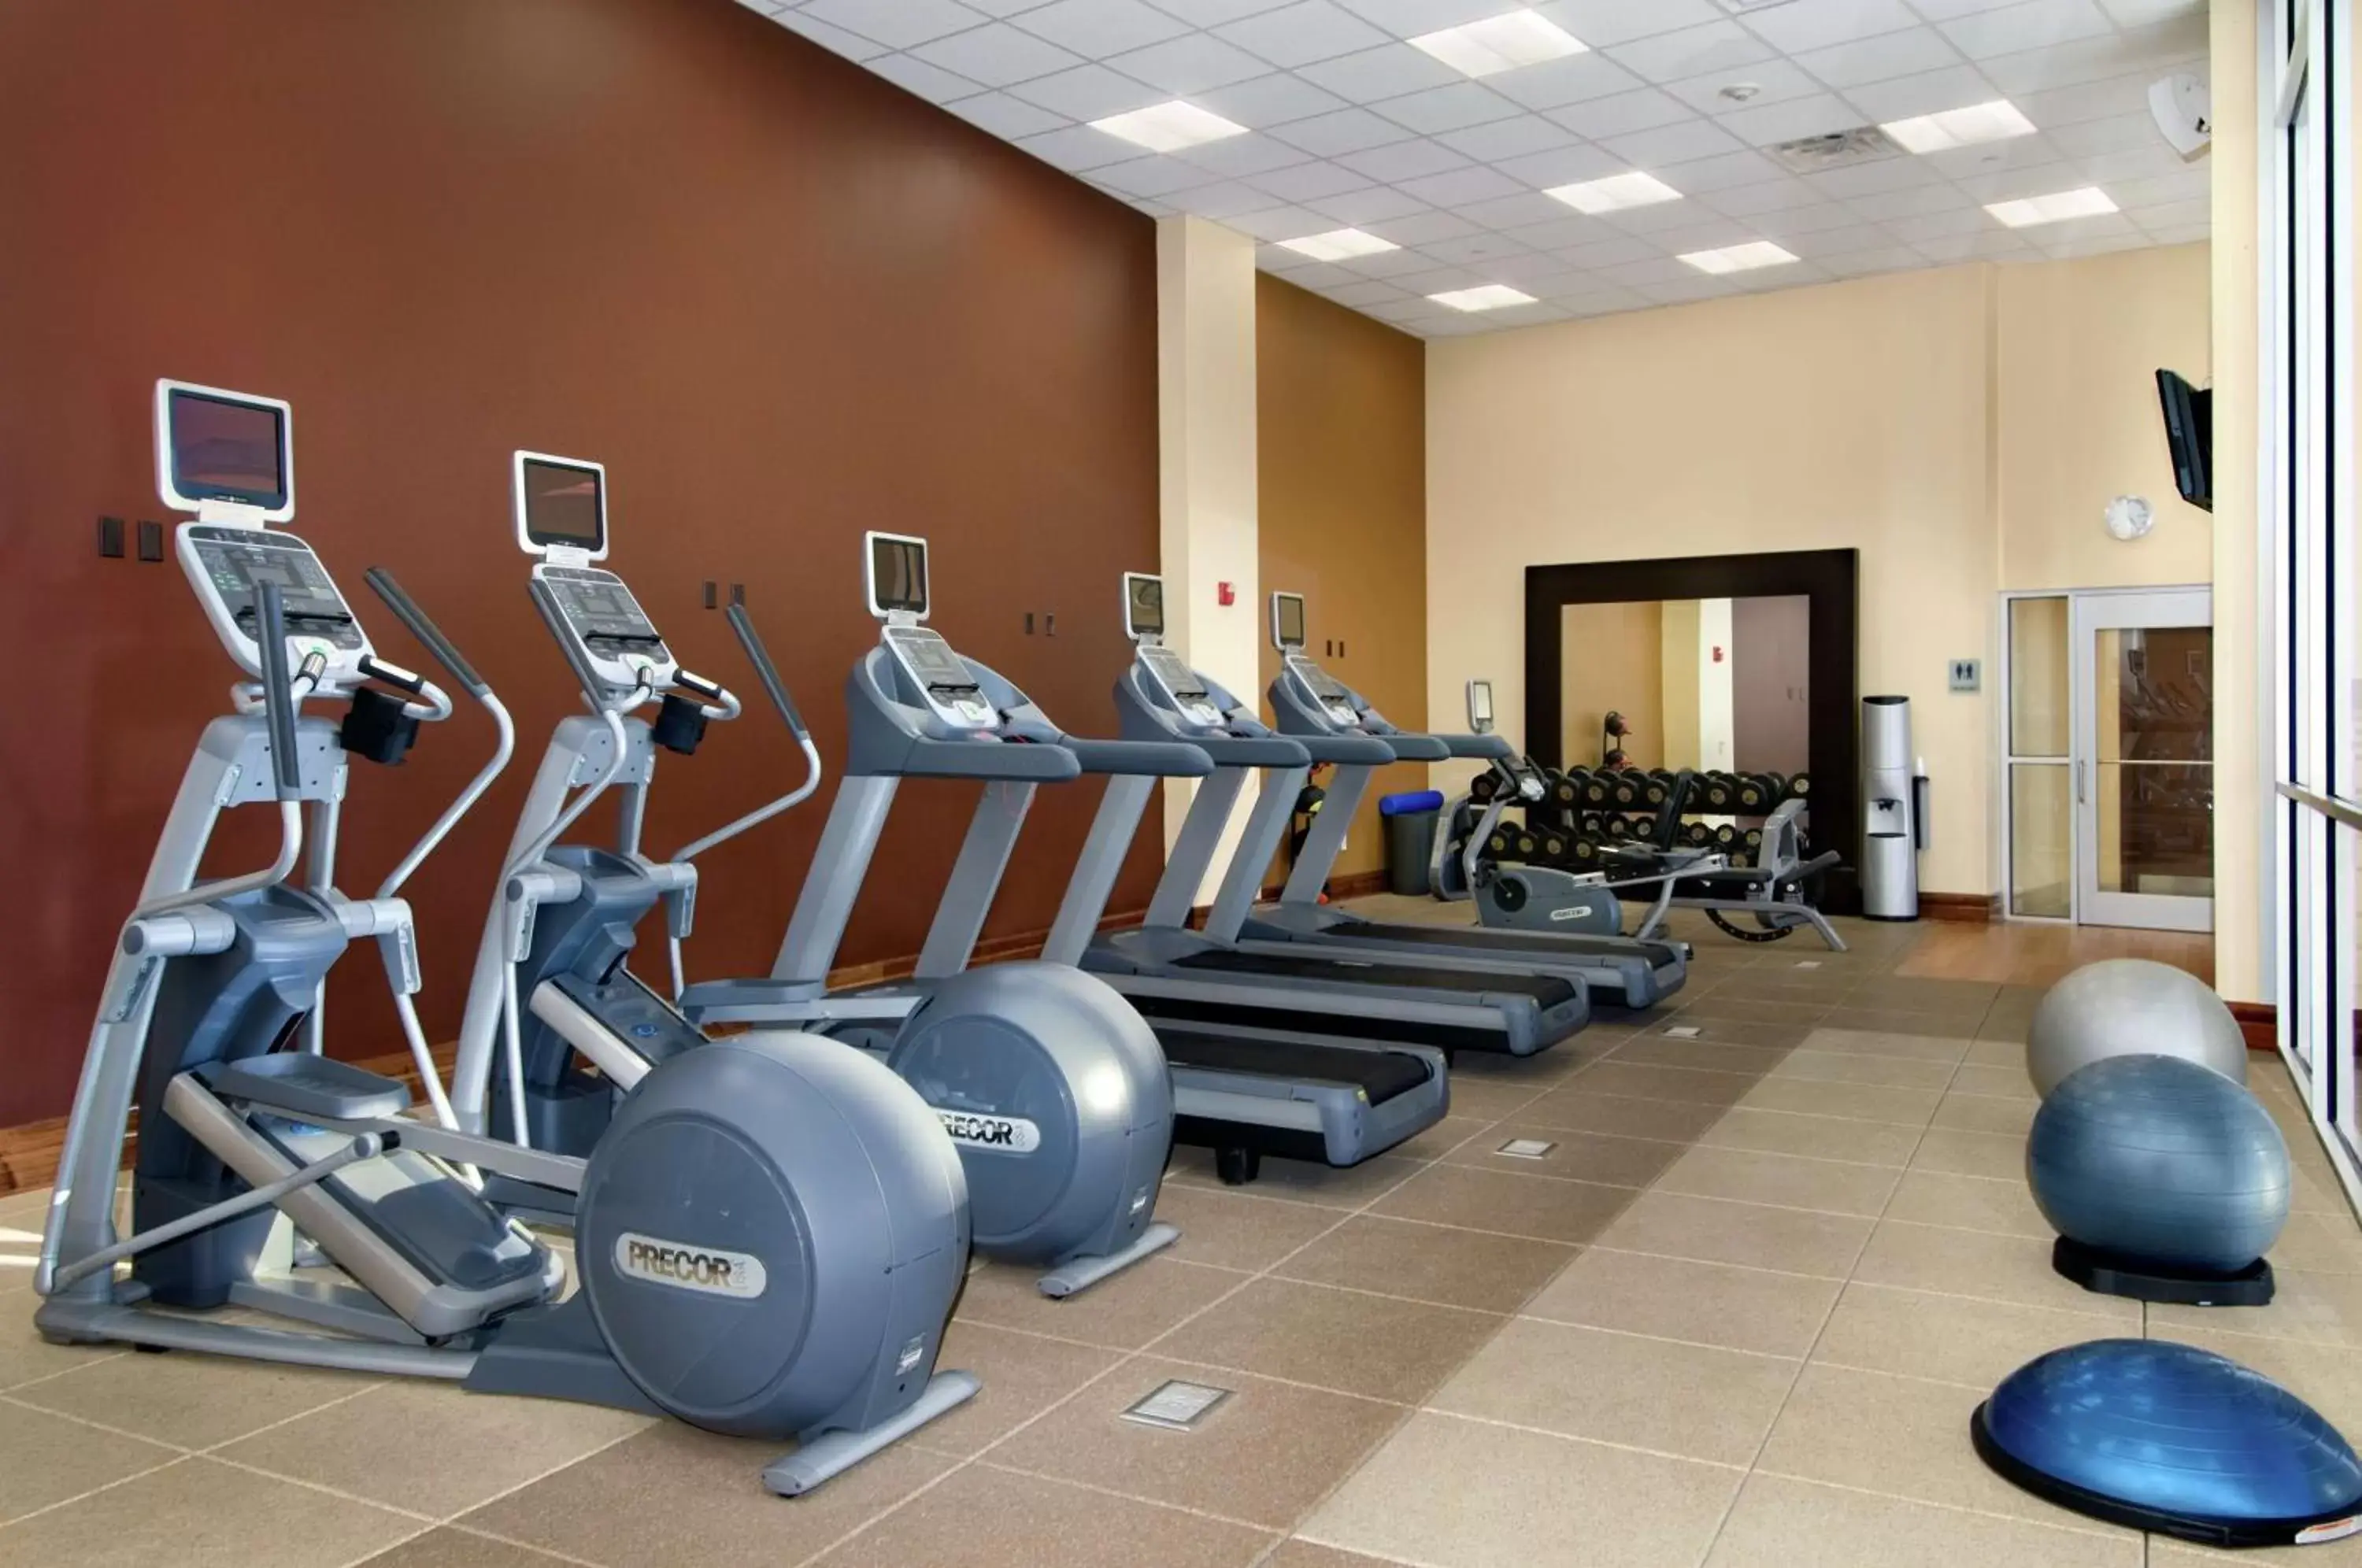 Fitness centre/facilities, Fitness Center/Facilities in Hilton Branson Convention Center